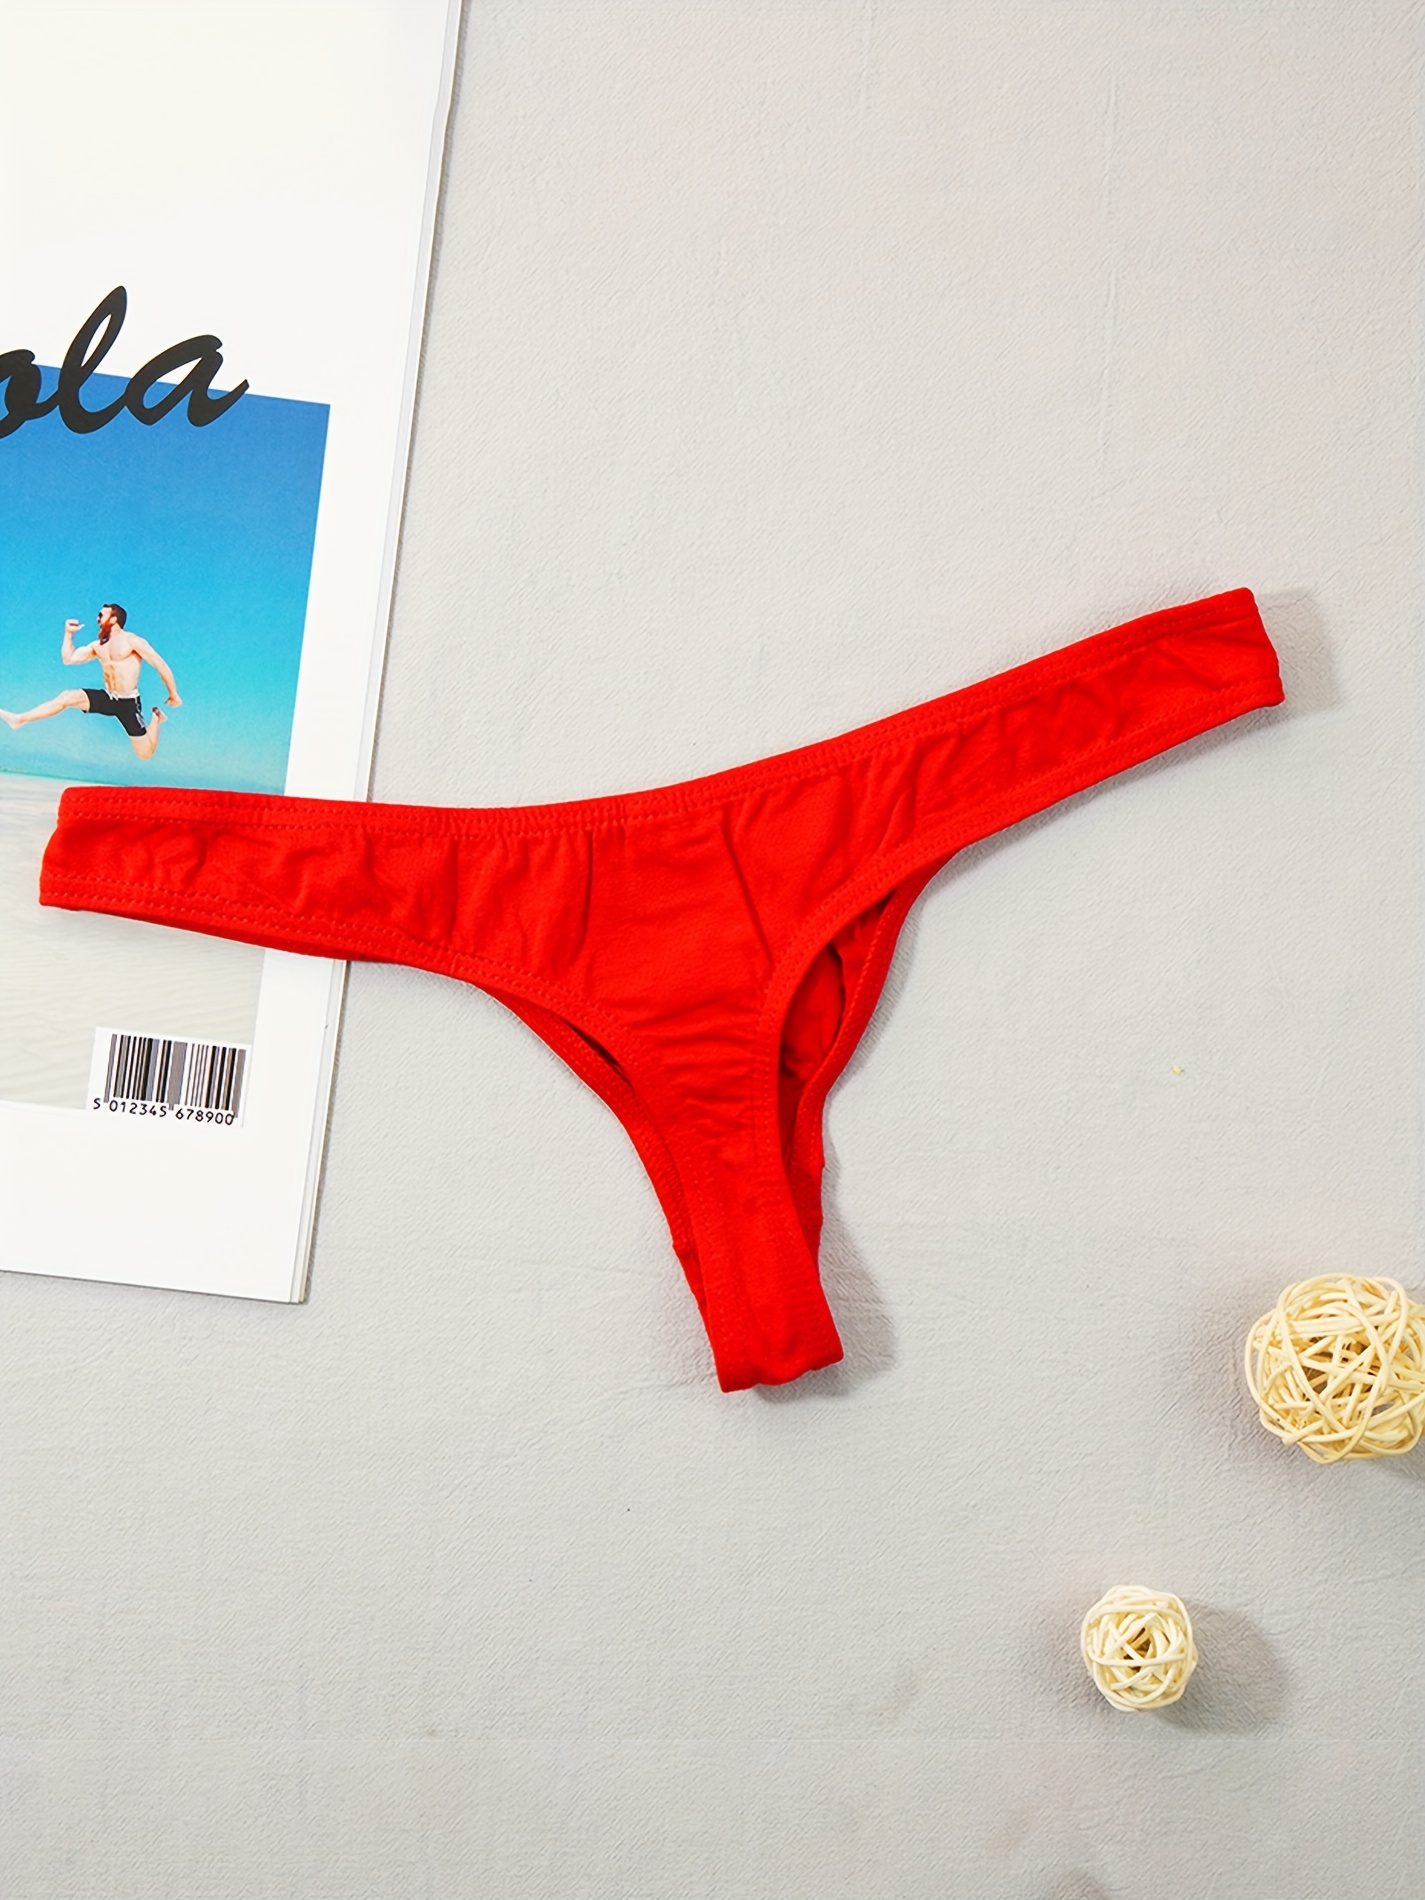 Women Erotic Seamless Plain G-string Panties T-back Thongs Underwear